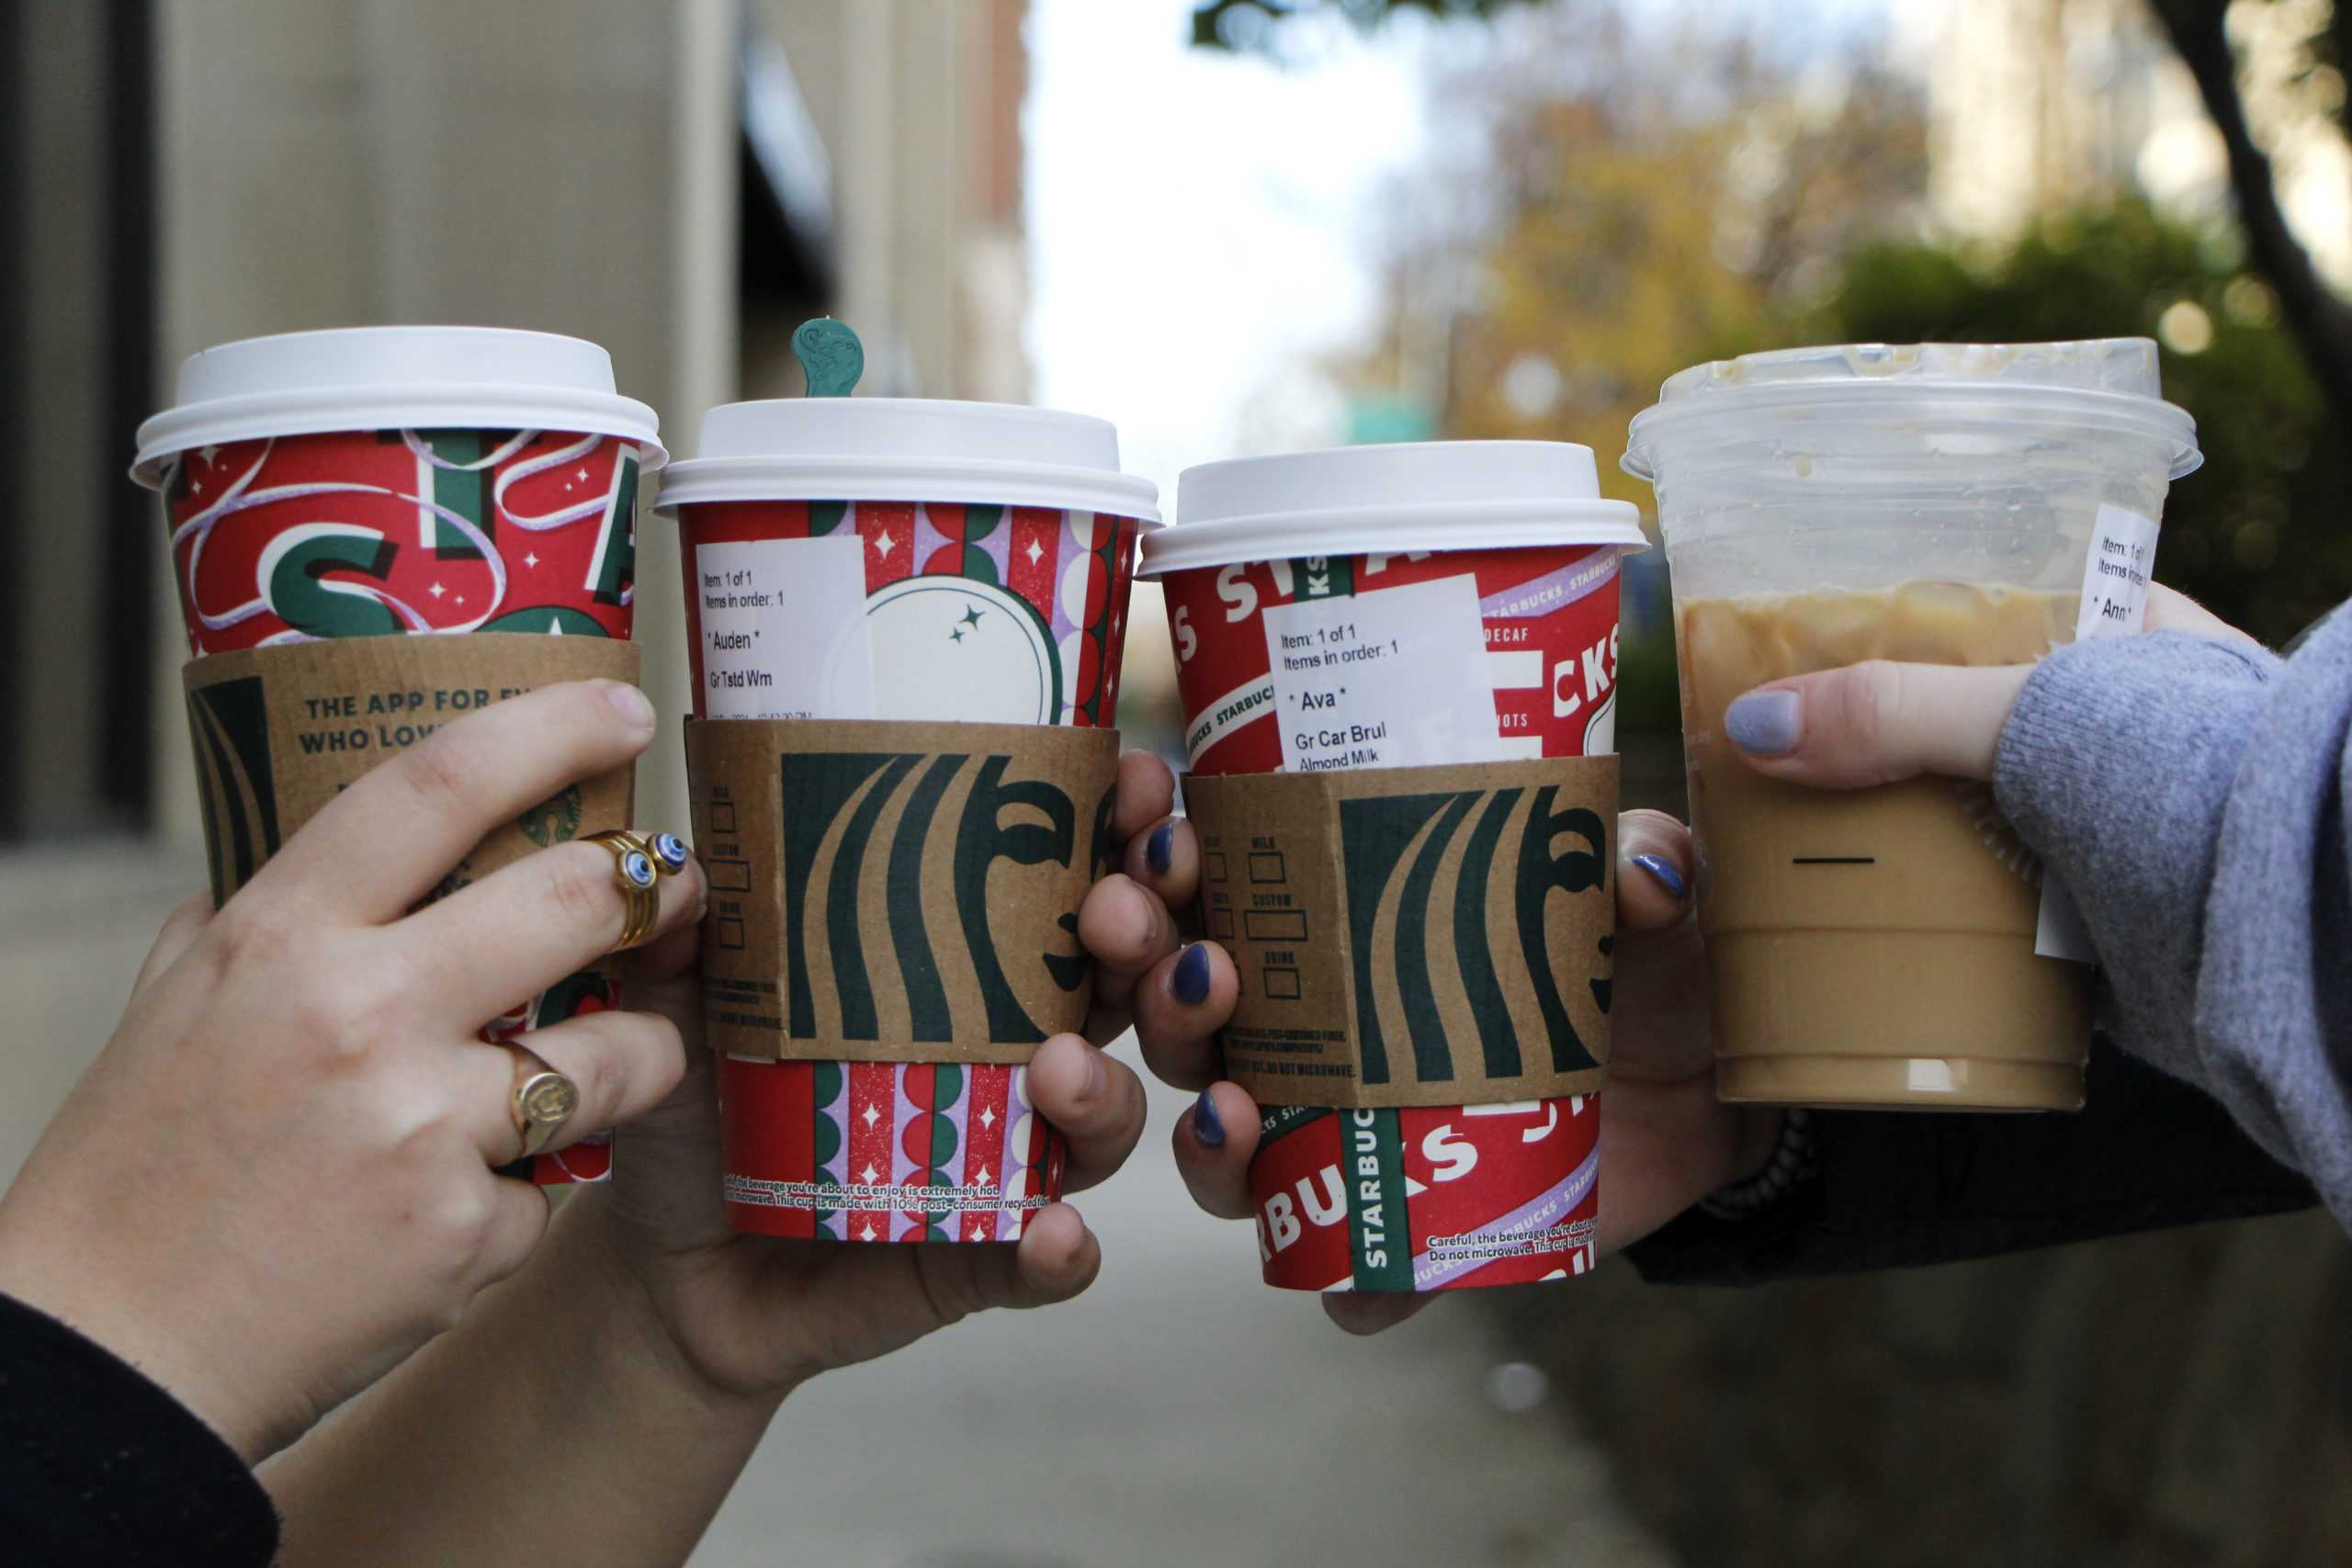 Doughnut Starbucks Reusable Hot Cup Coffee Stopper